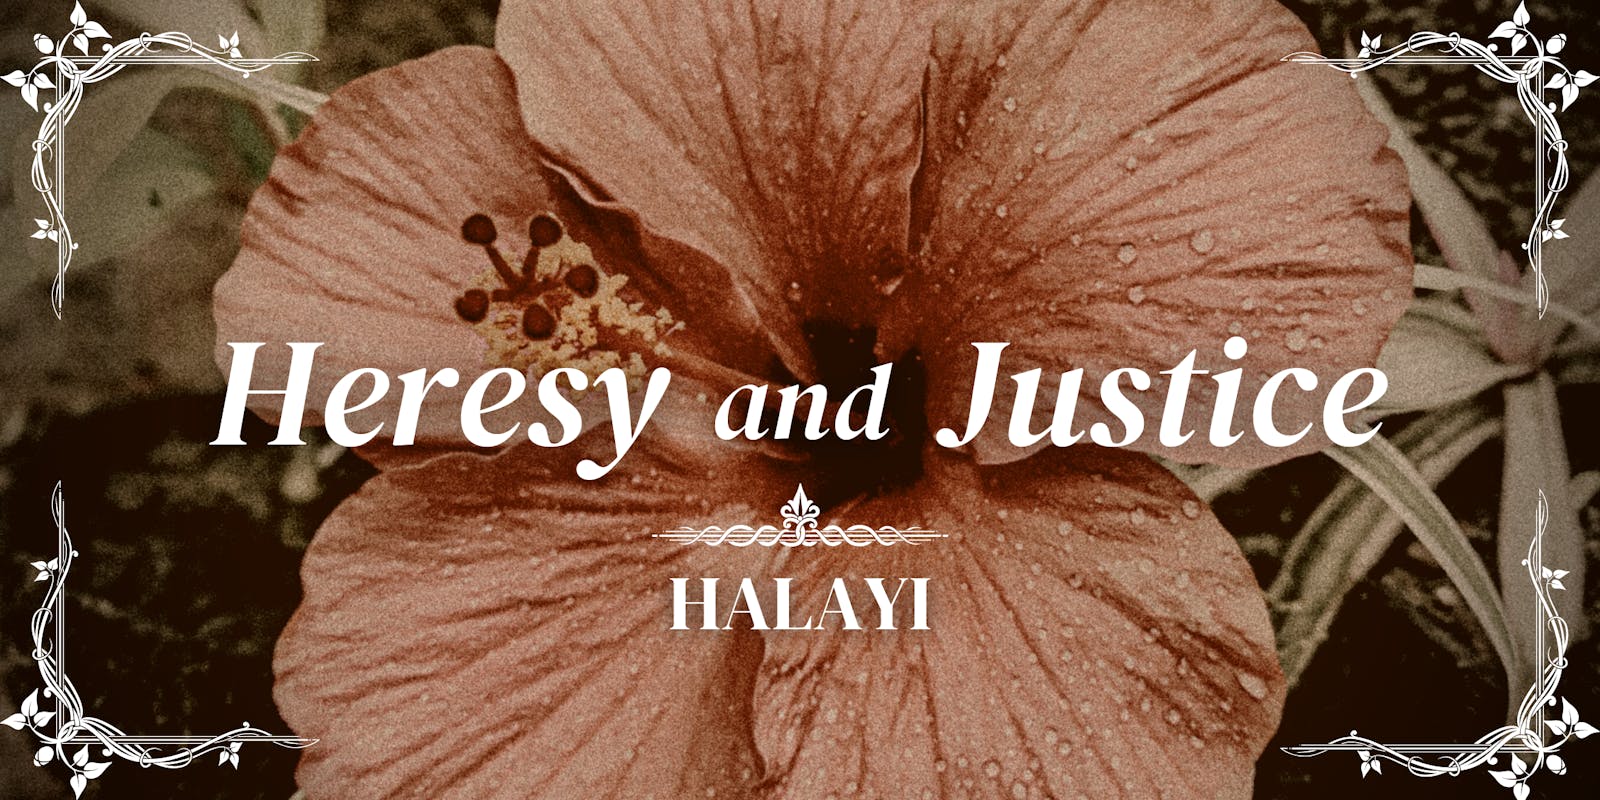 Heresy and Justice by Haliya